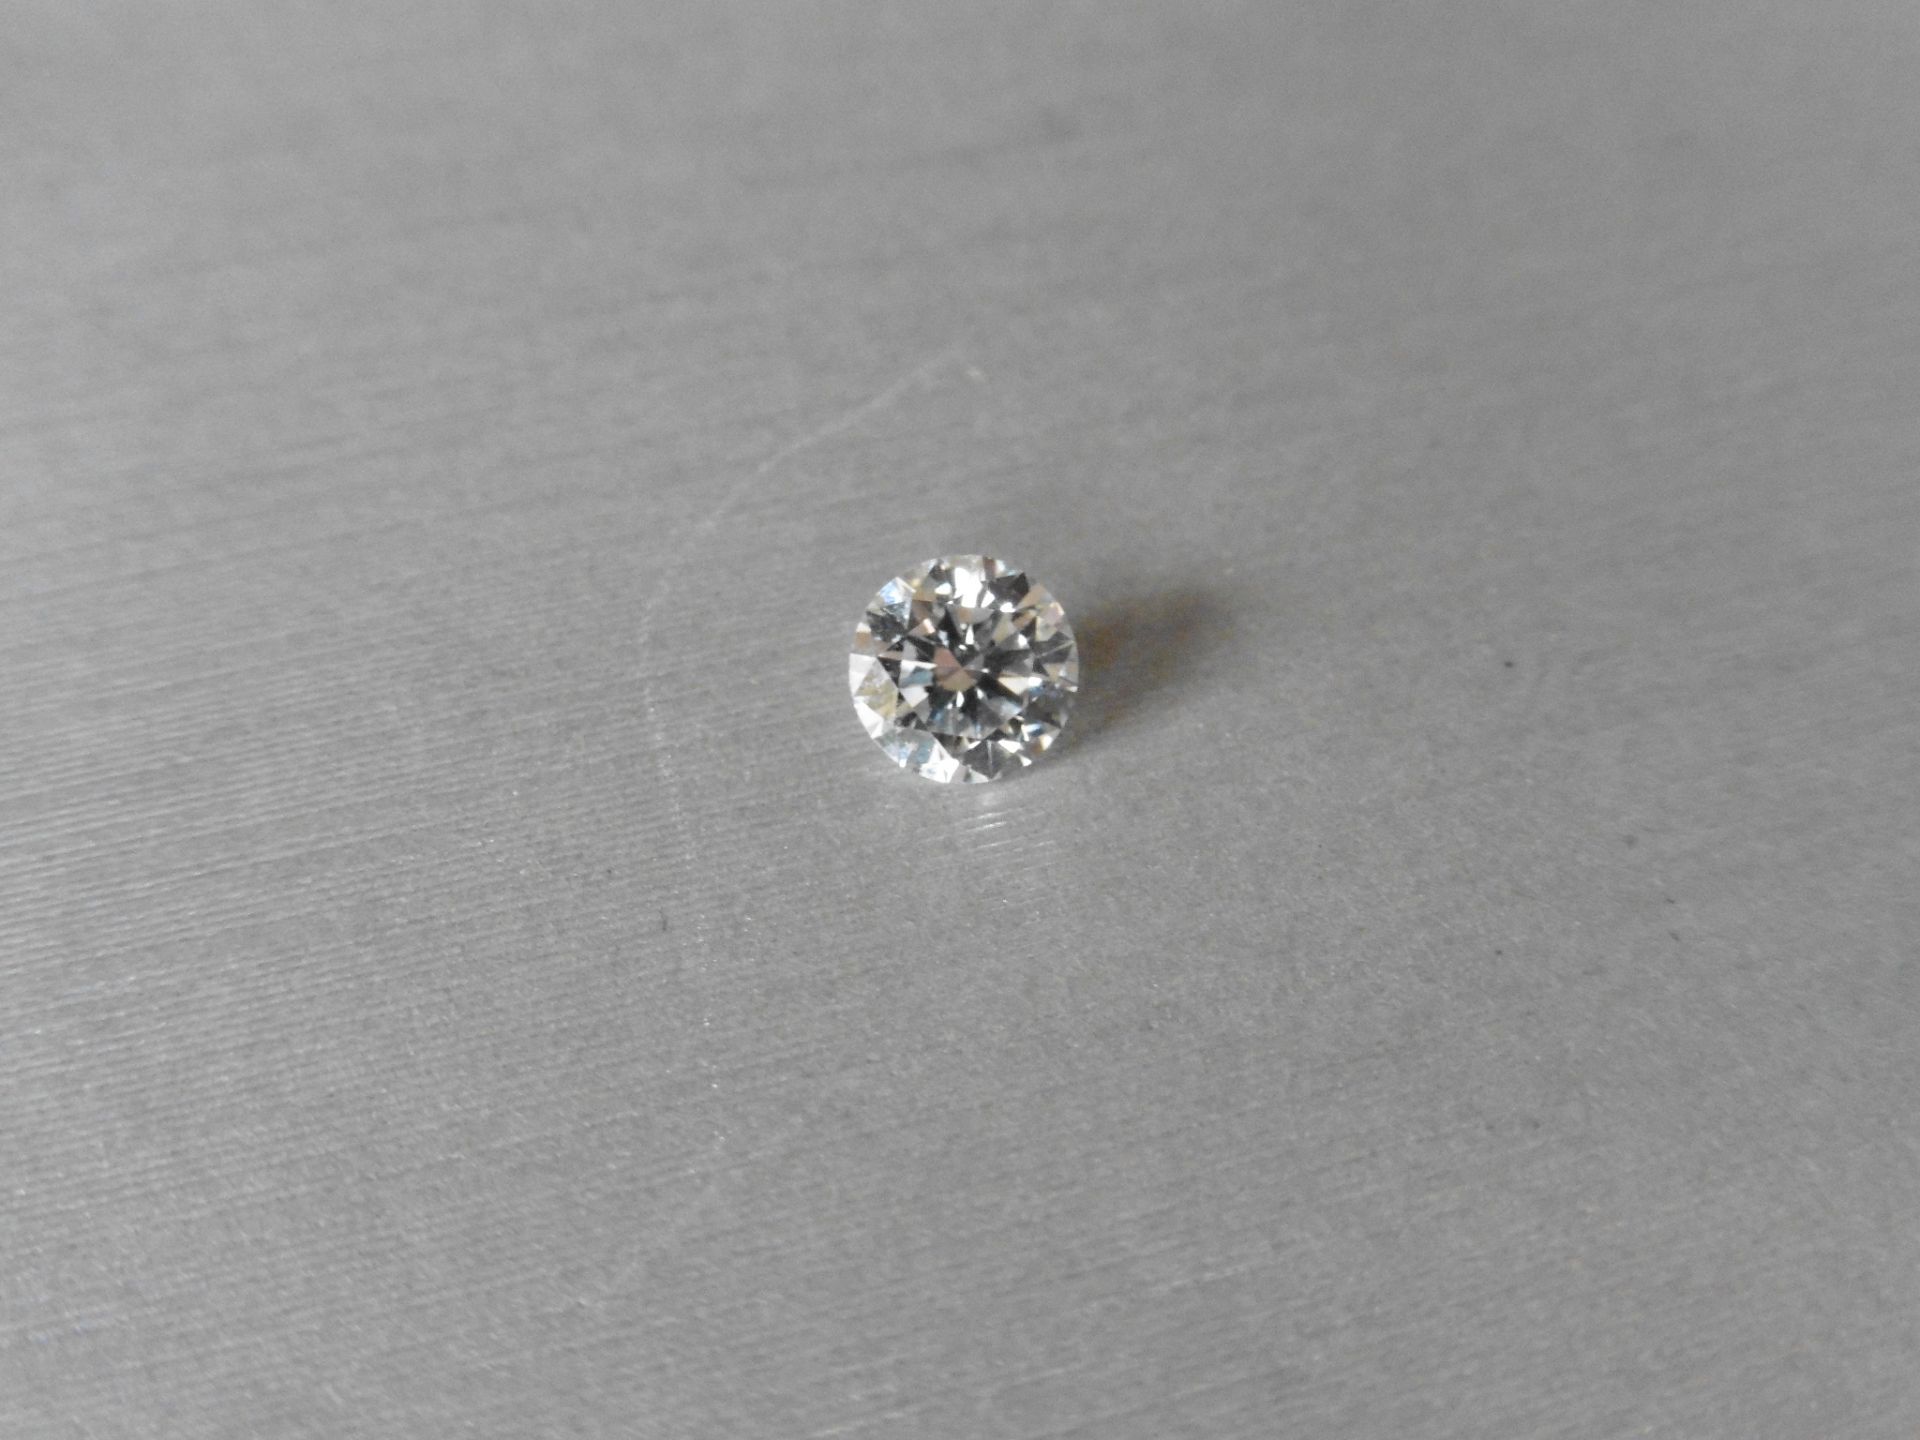 1.07ct single brilliant cut diamond, H colour SI1 clarity. 6.54 mm x 6.58mm x 4.01mm. Suitable for